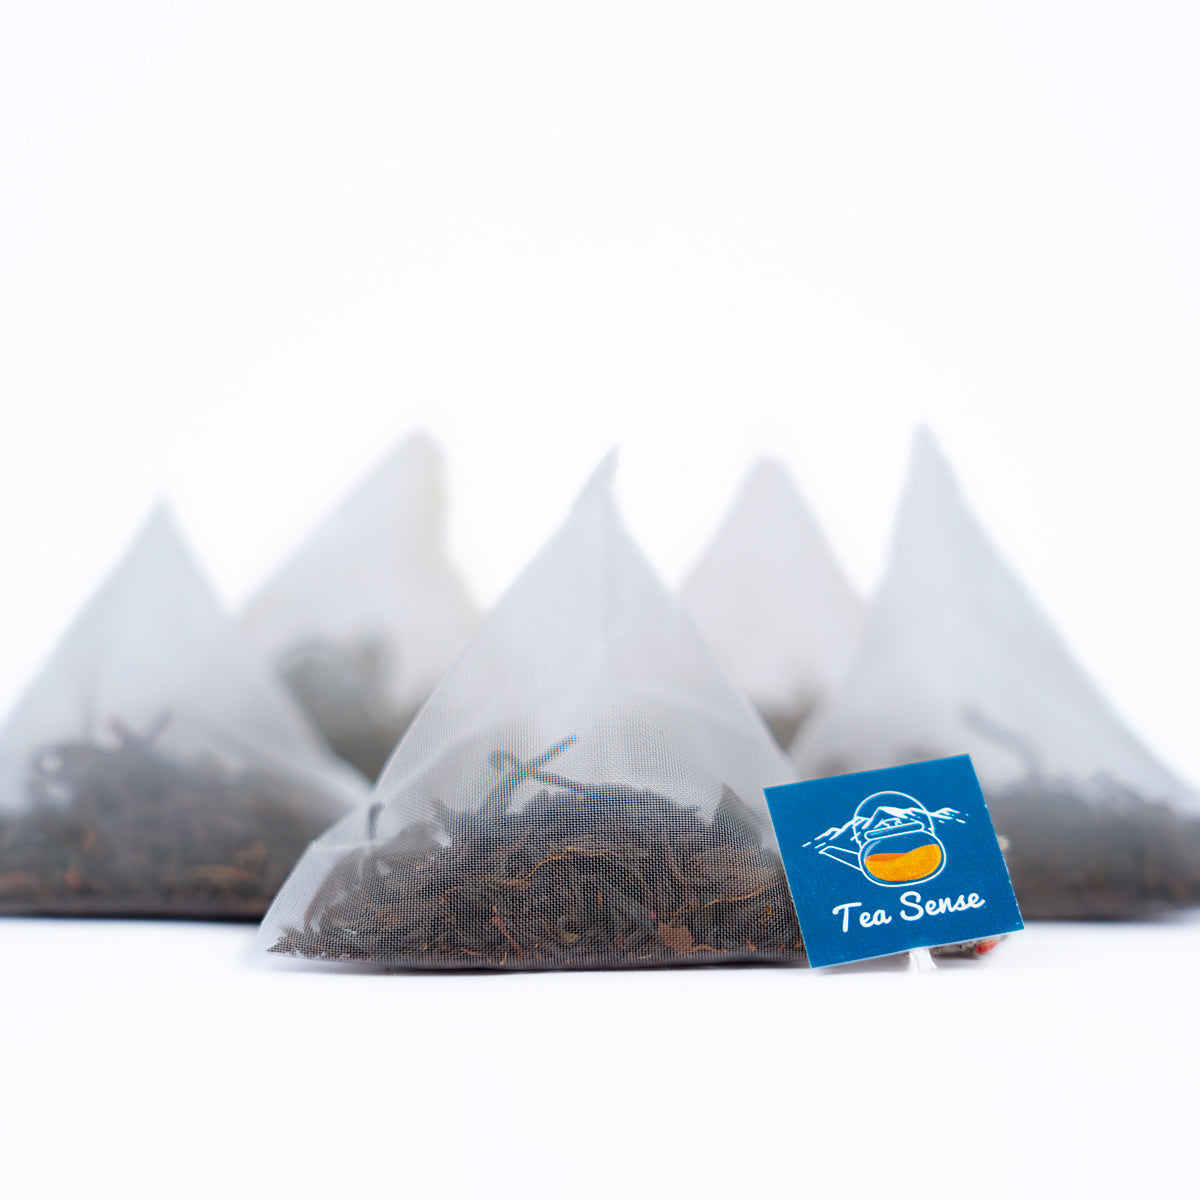 Tea Sense English Breakfast Tea Bags Box - buy in USA, Australia, Canada